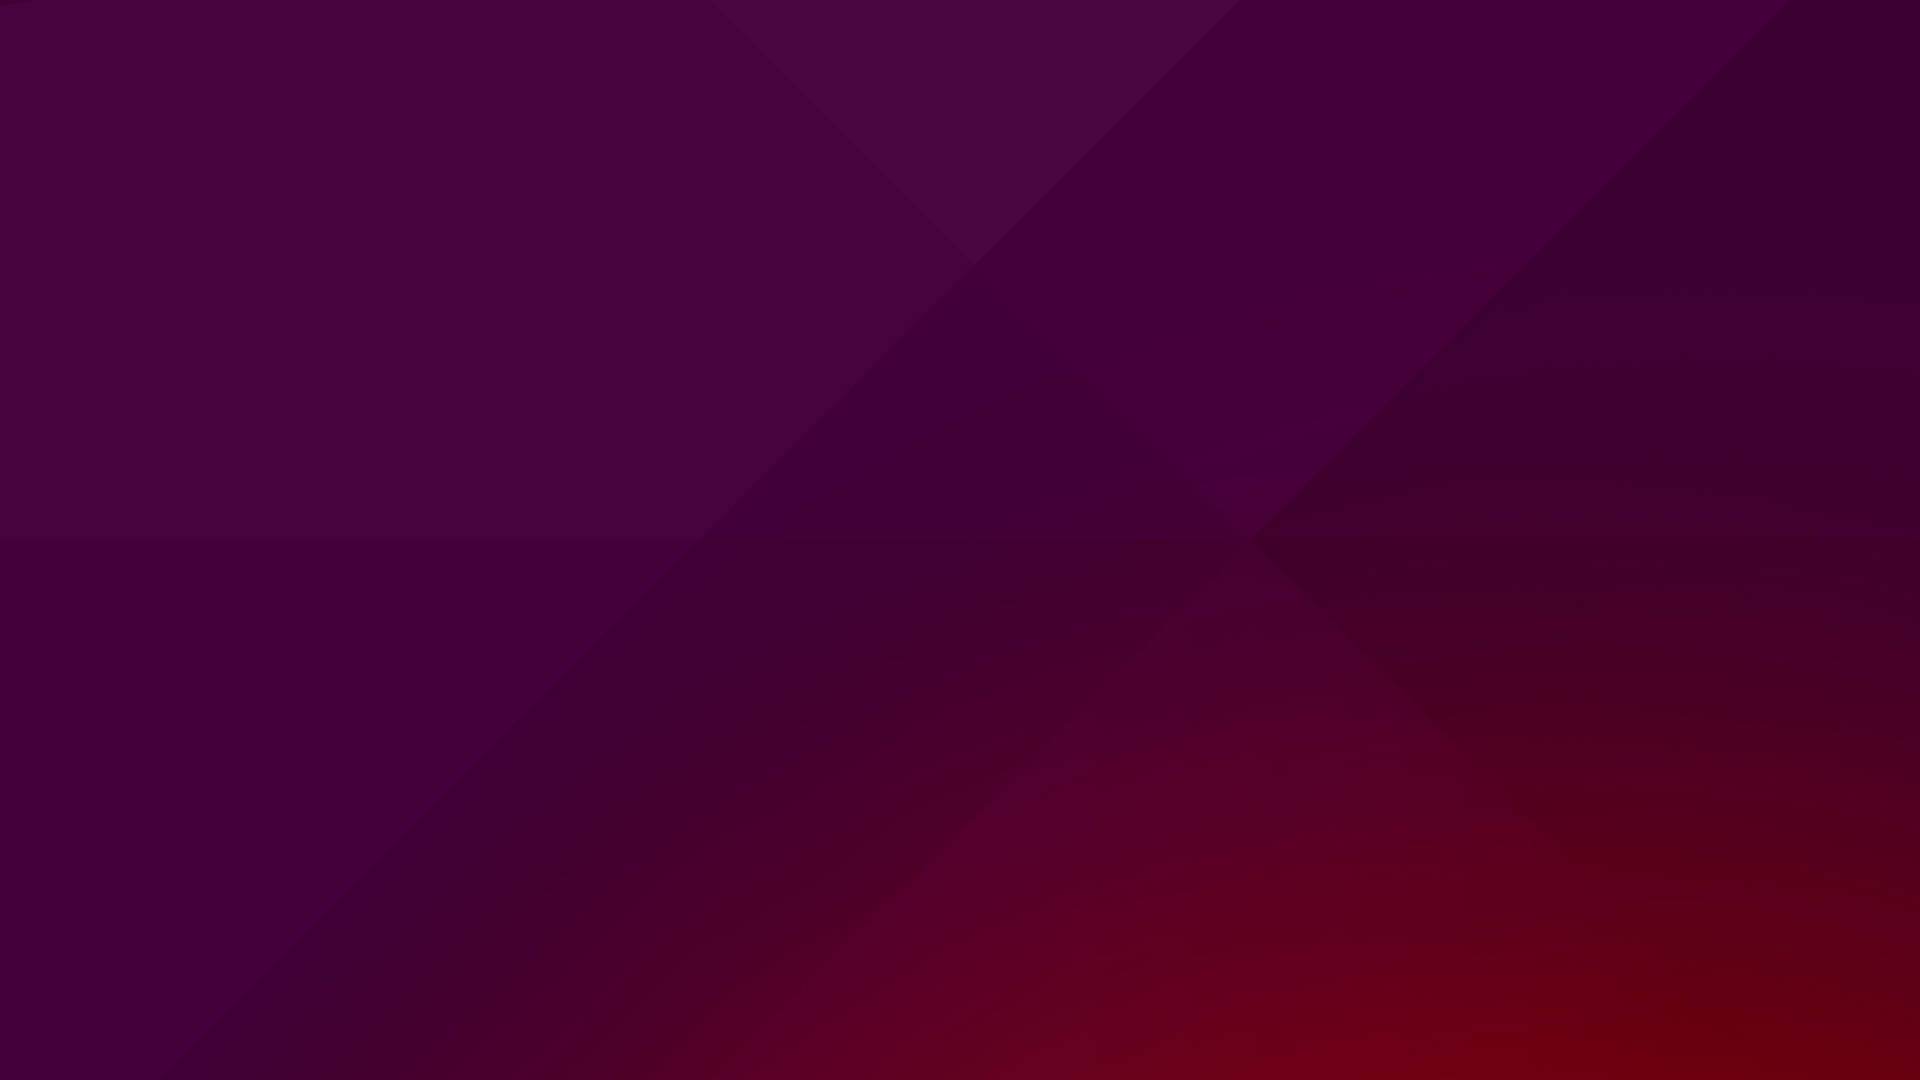 Default Dark Purple Ubuntu Wallpaper